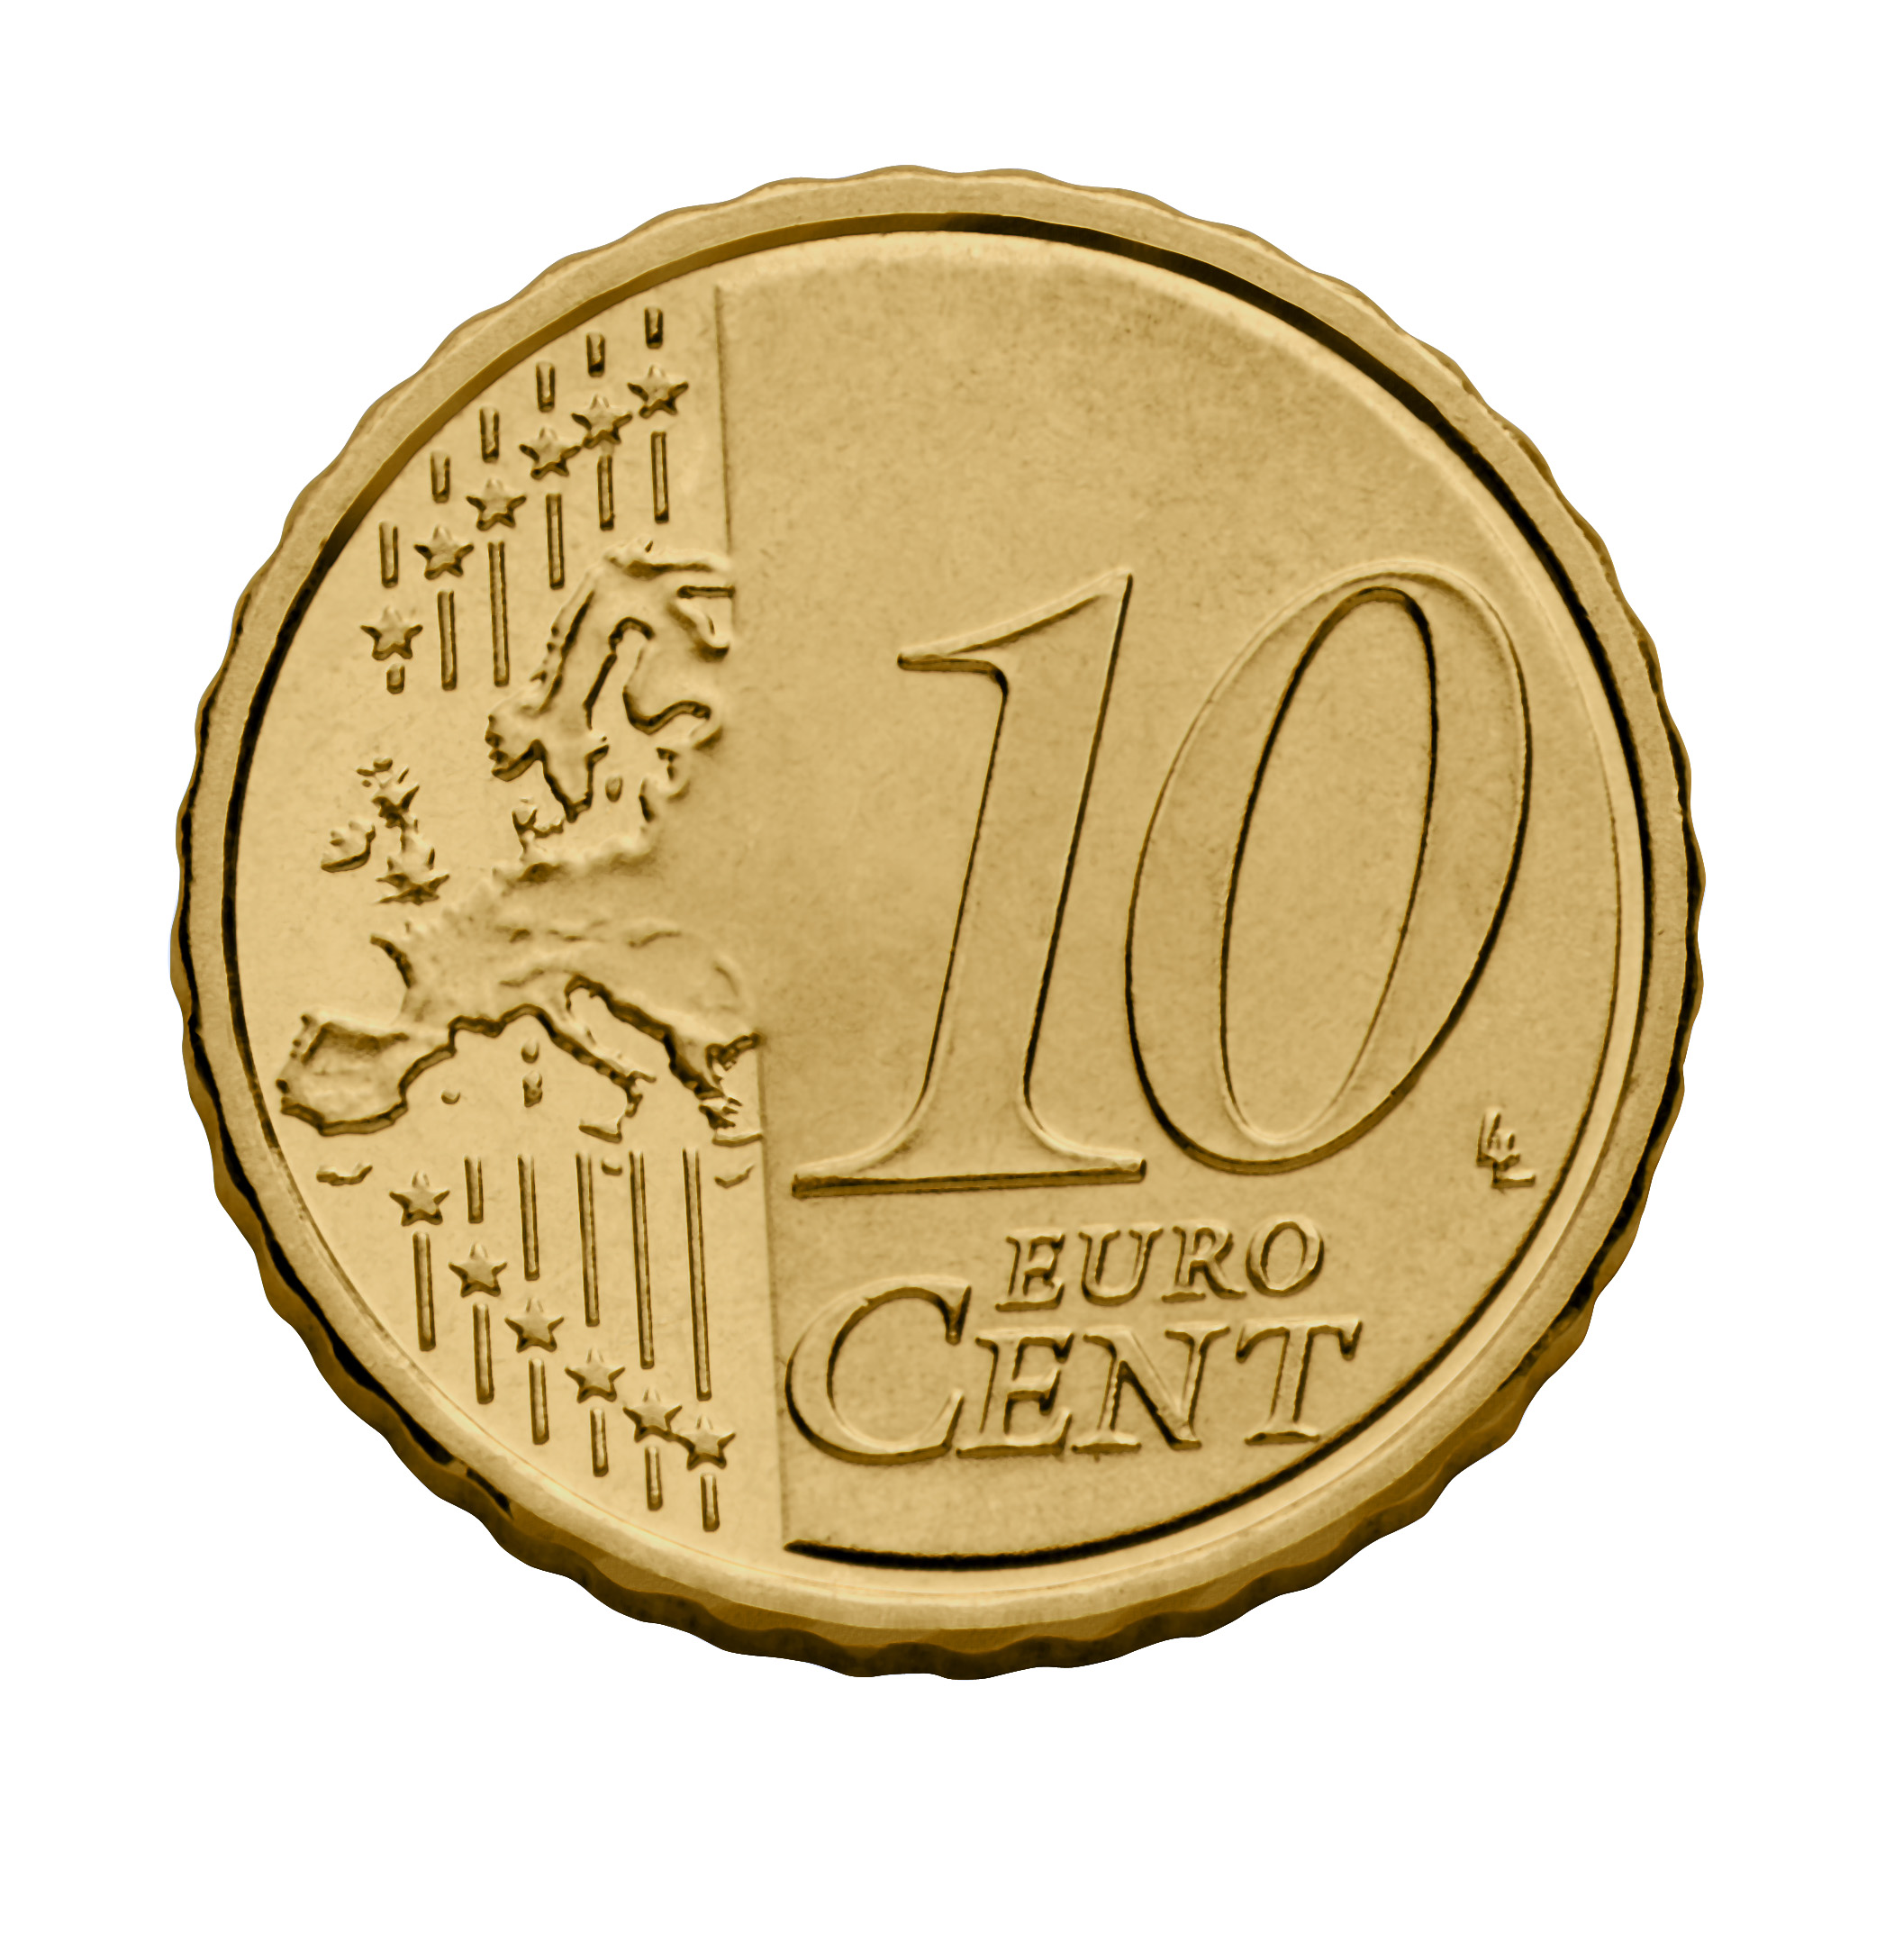 Will new EU countries make their own Euros? | Page 2 | Coin Talk